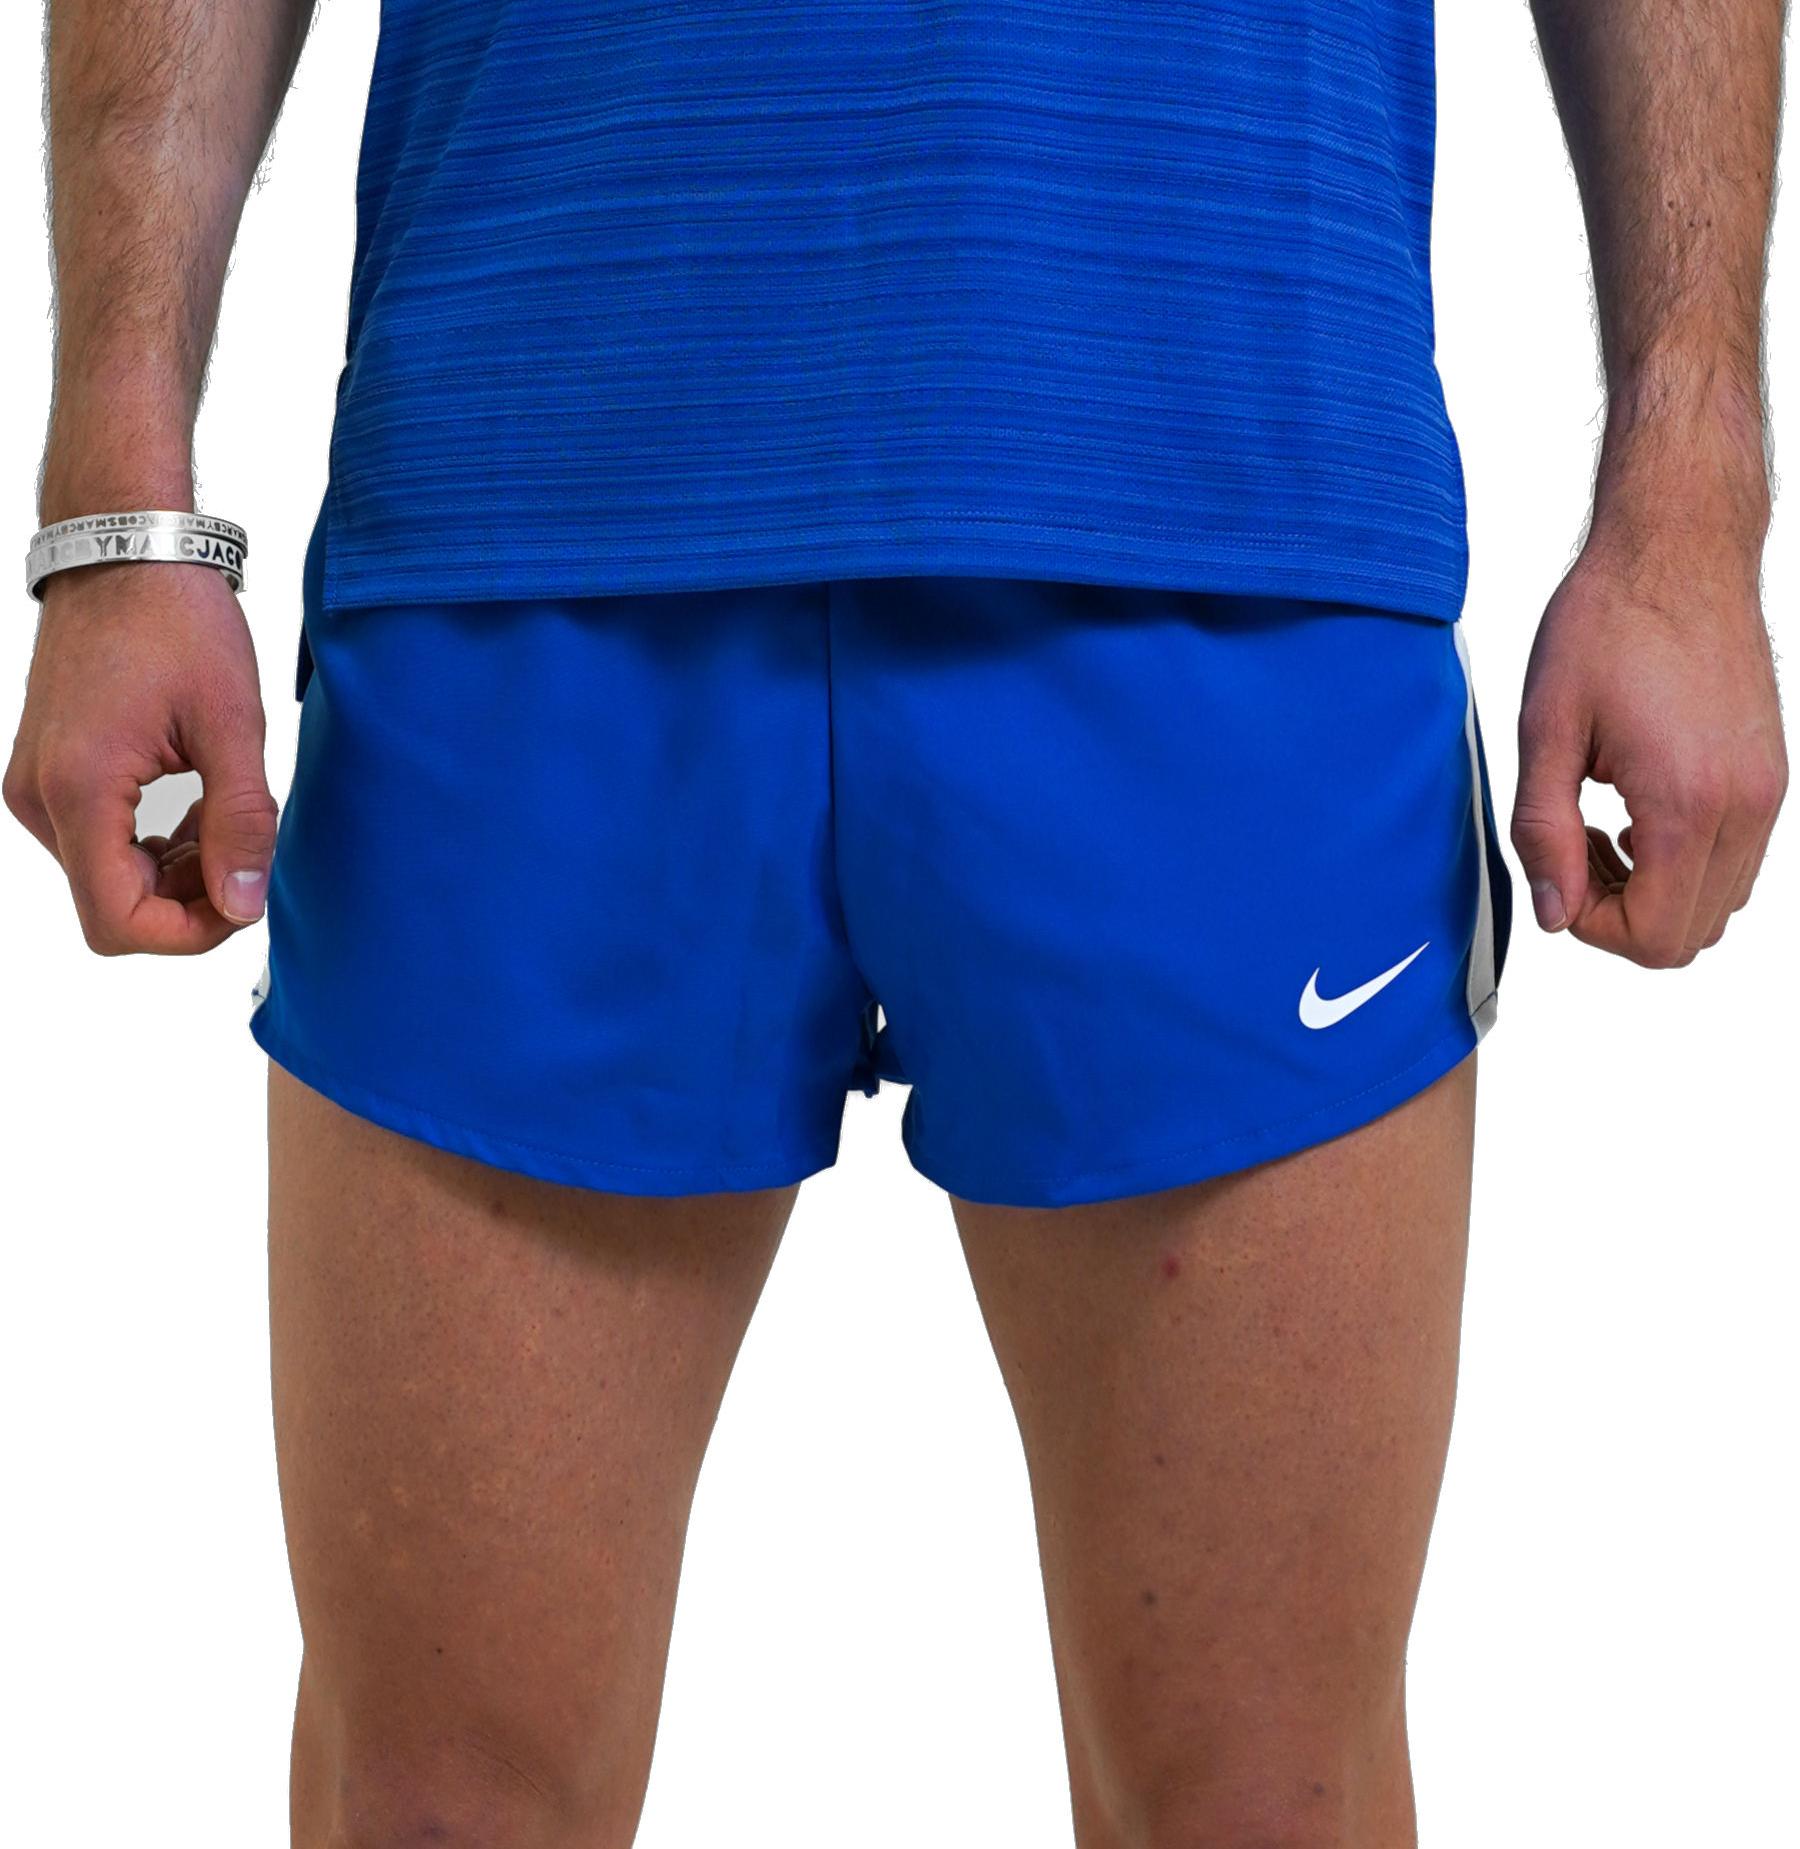 Pantalón corto Nike men Stock Fast 2 inch Short